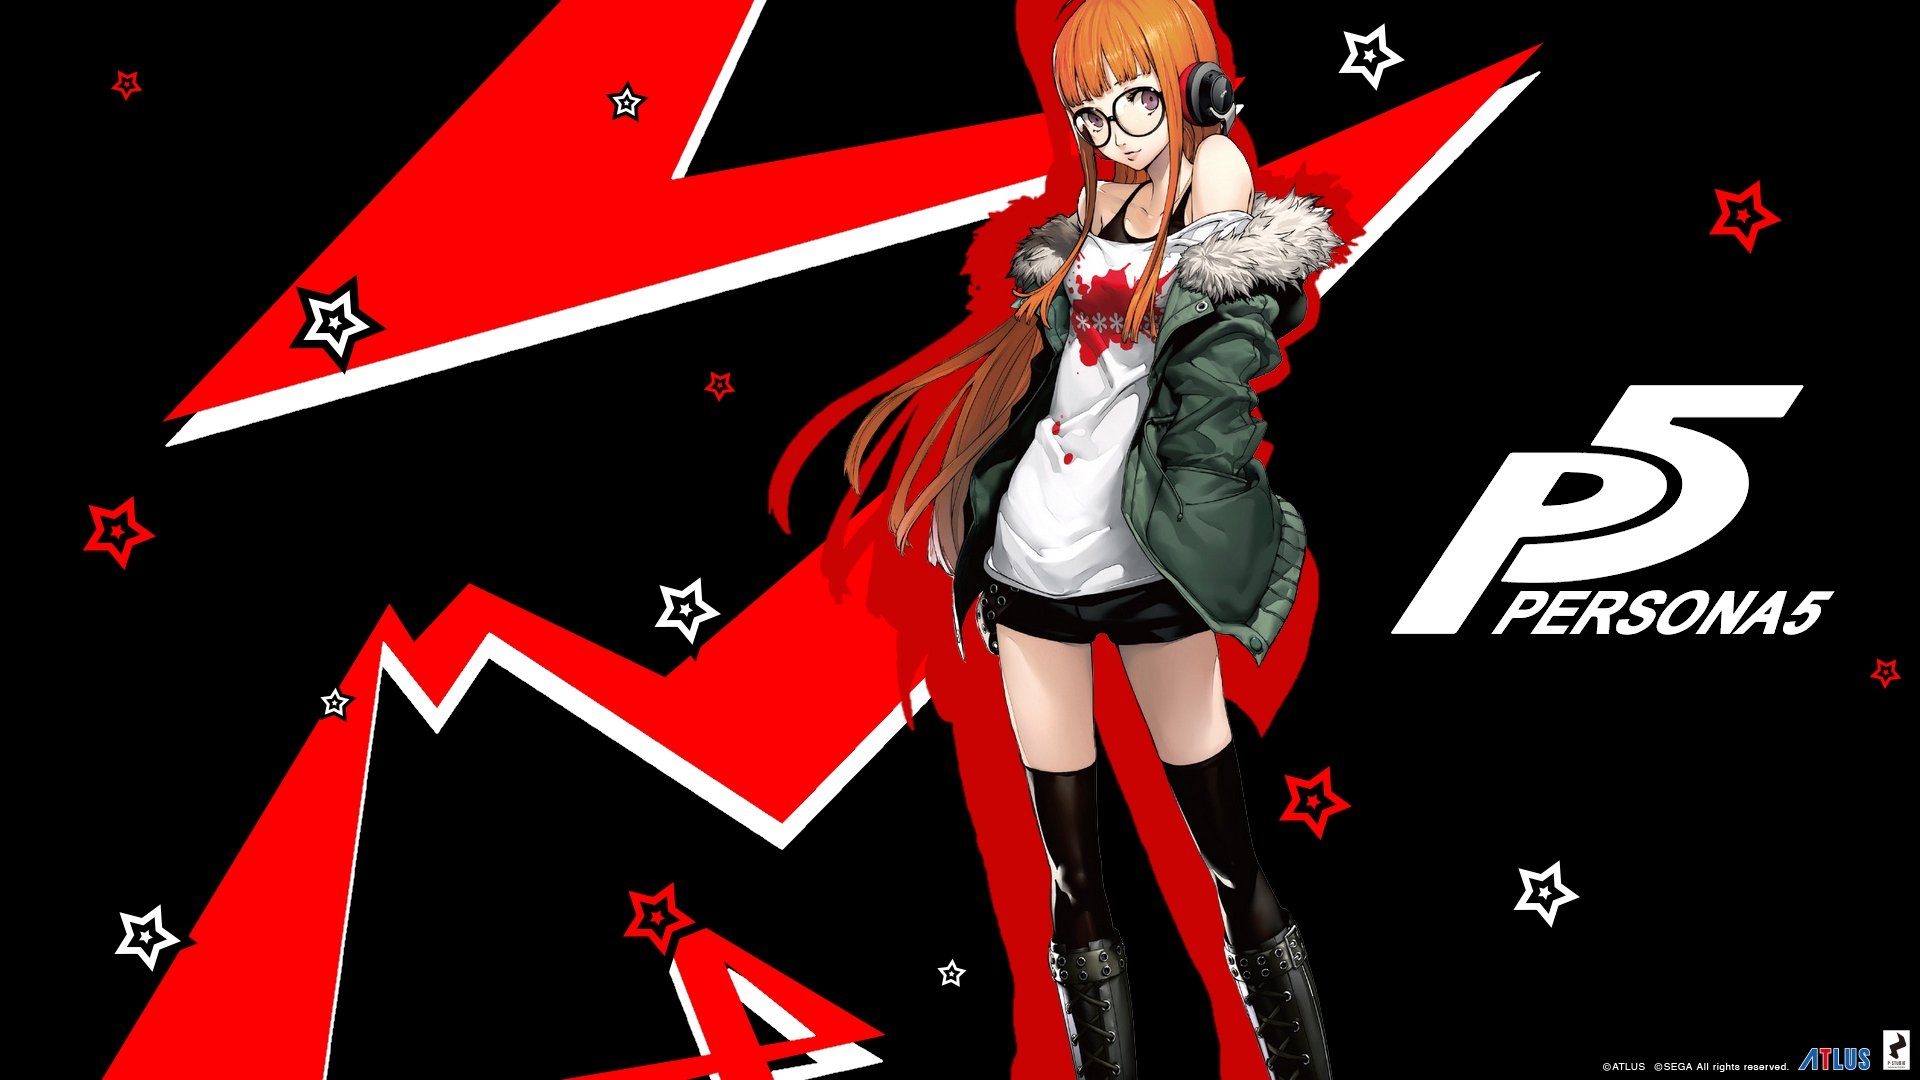 Desktop Wallpaper Persona 5 Video Game, Anime Girl, HD Image, Picture, Background, Gppkjn